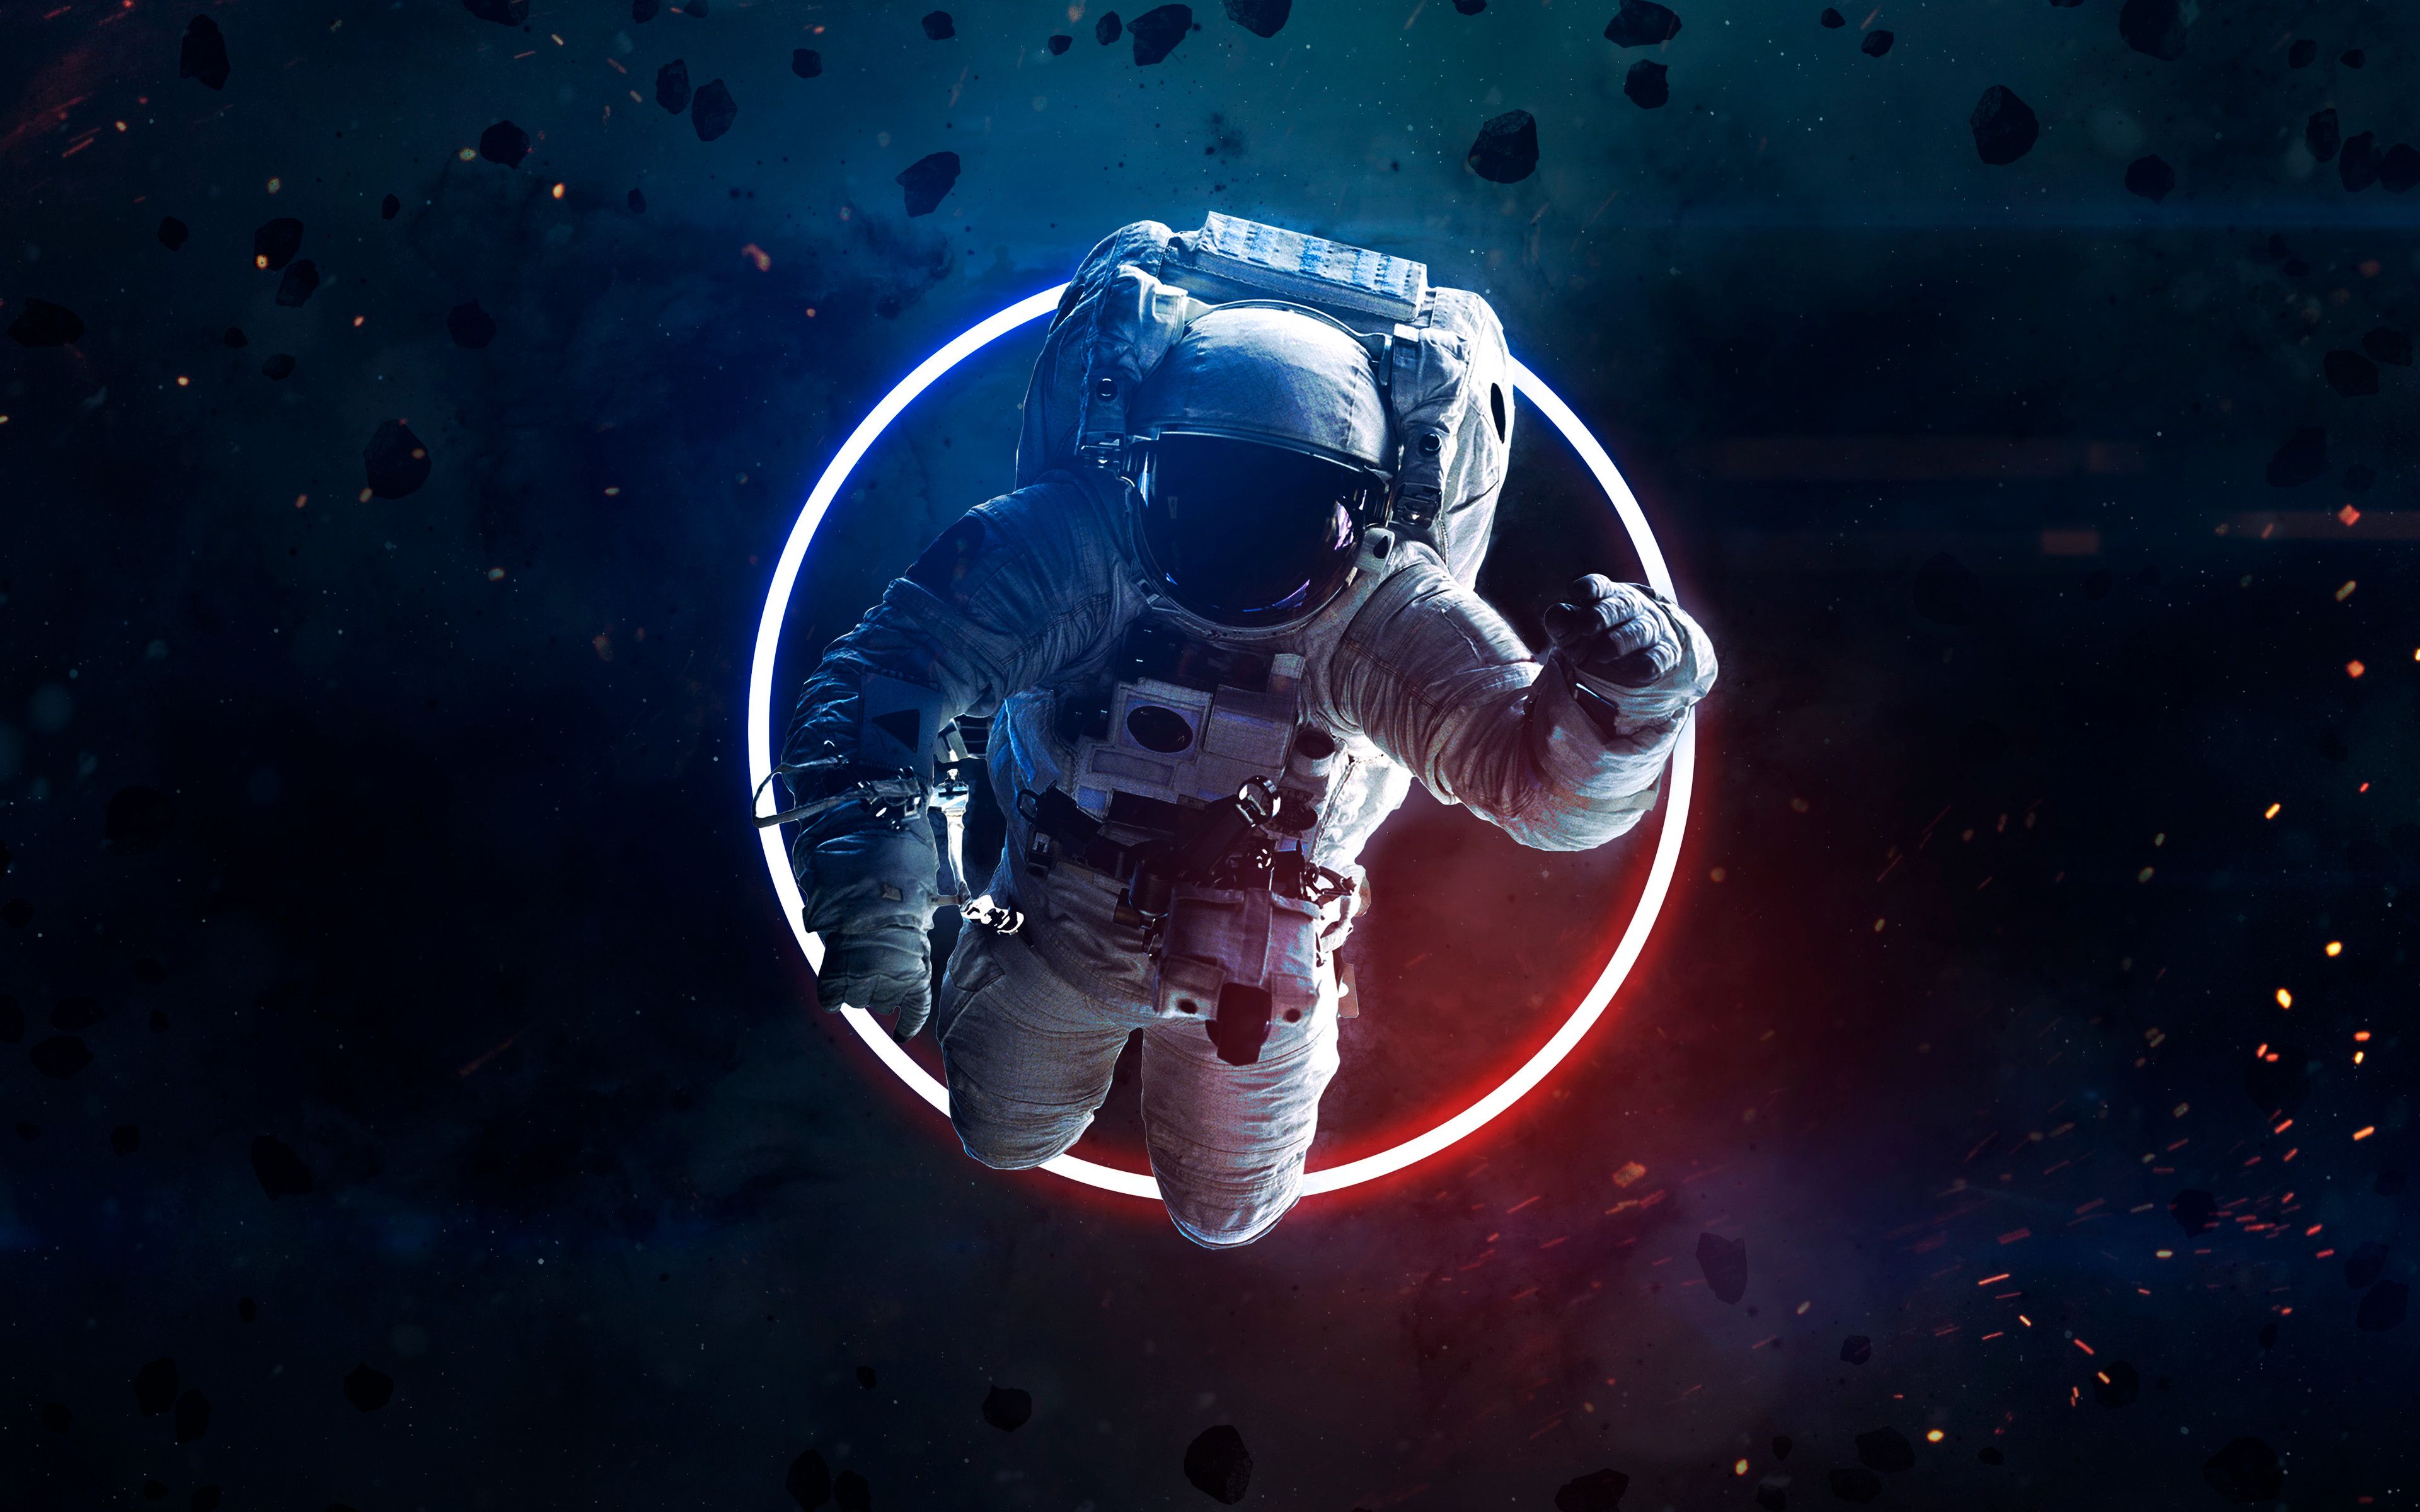 Astronaut 4K Wallpaper, Asteroids, Space suit, Neon light, Space travel, Space adventure, Space